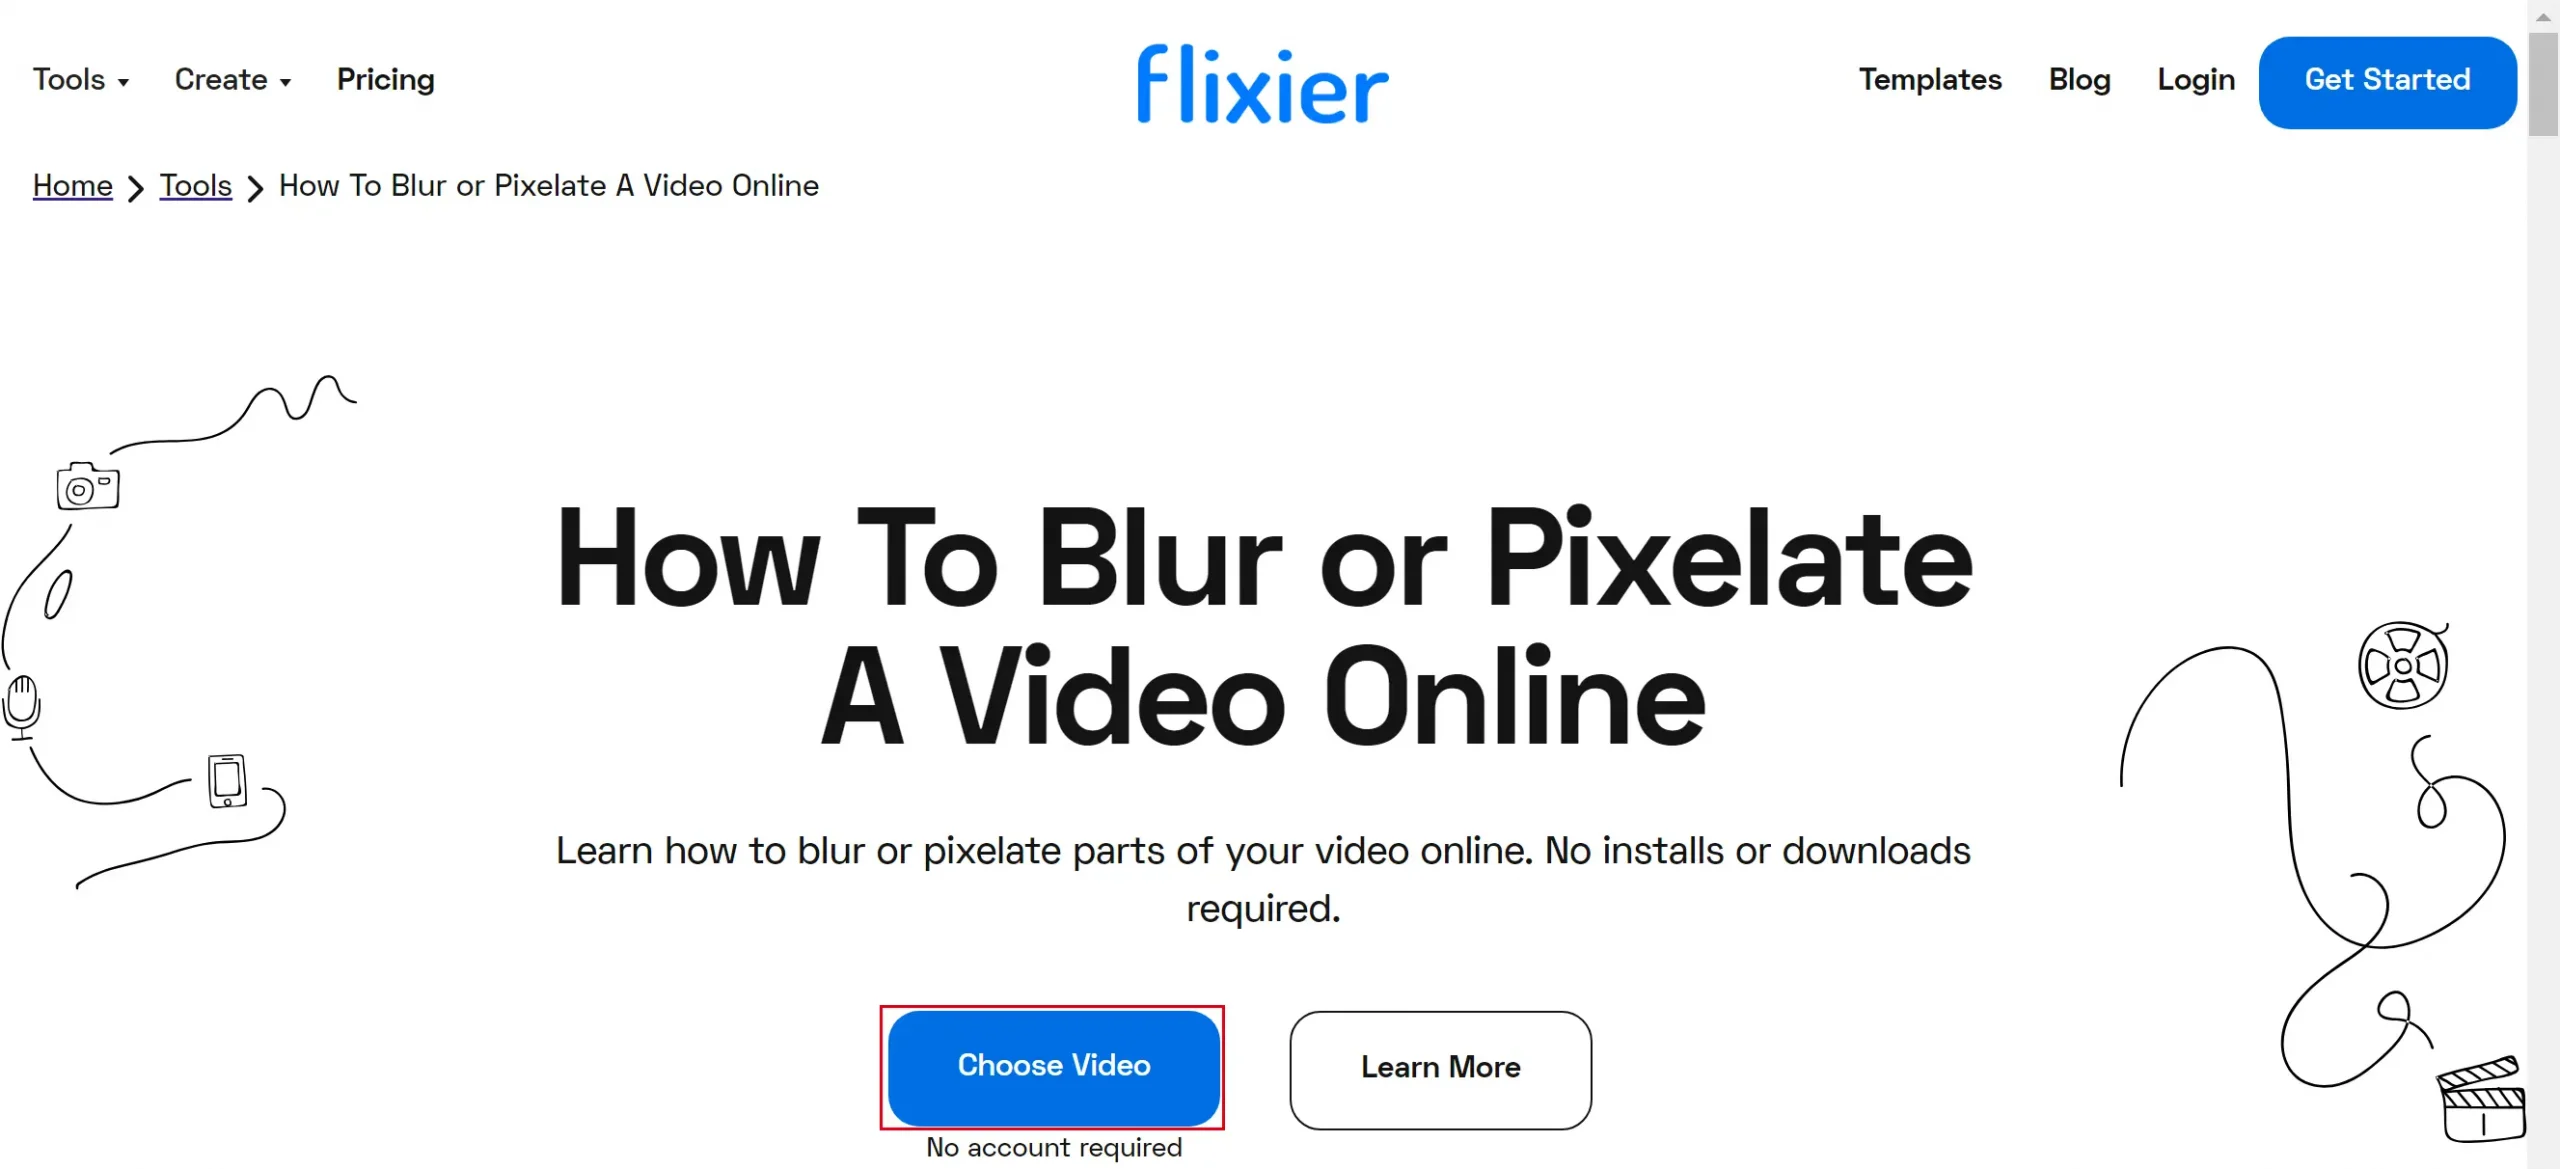 upload a video through flixier